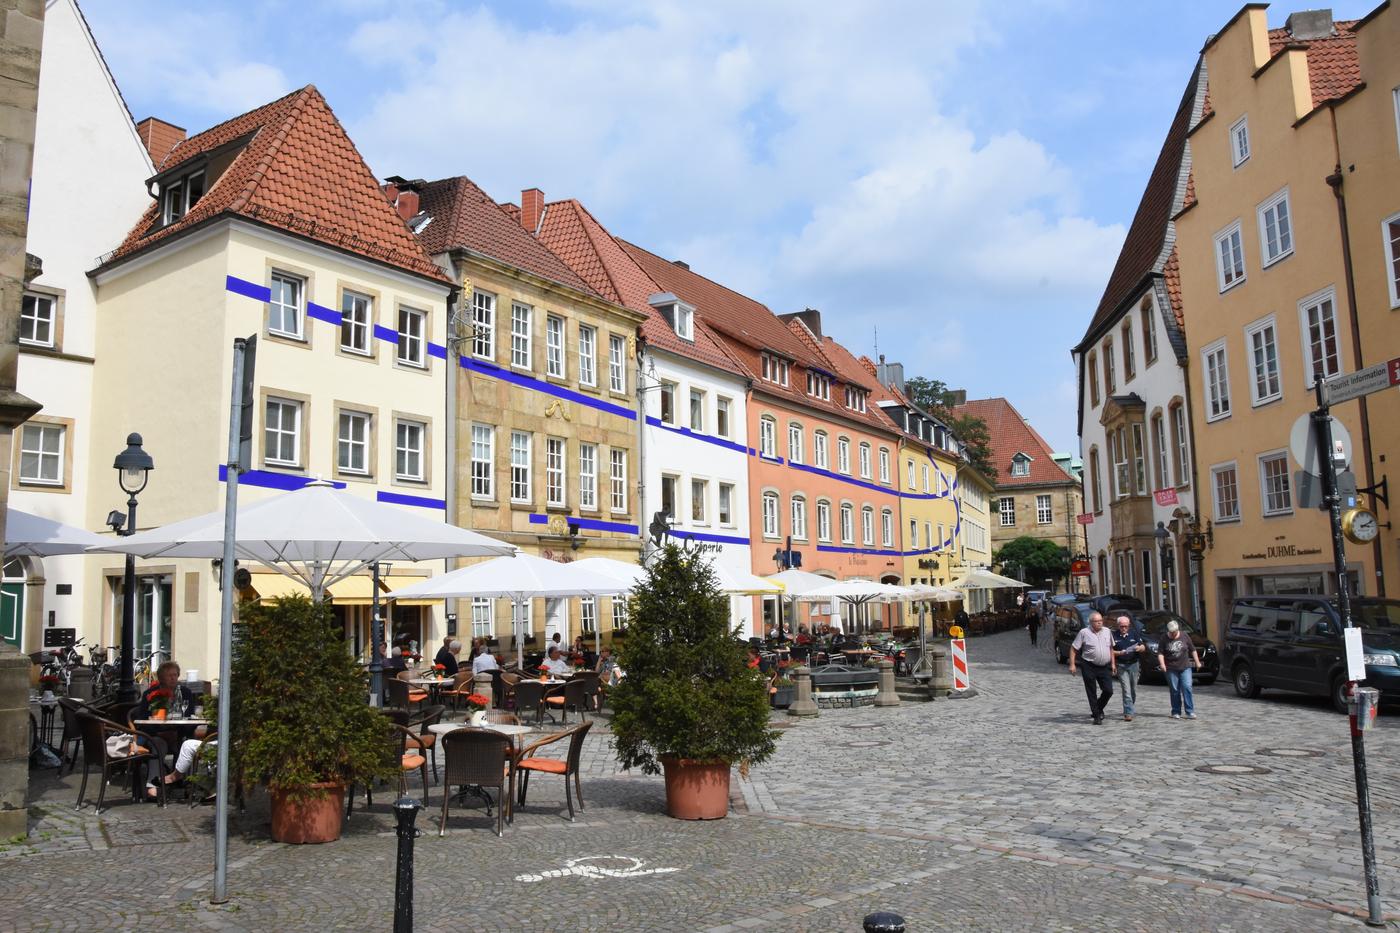 Osnabrück: City full of history and greenery